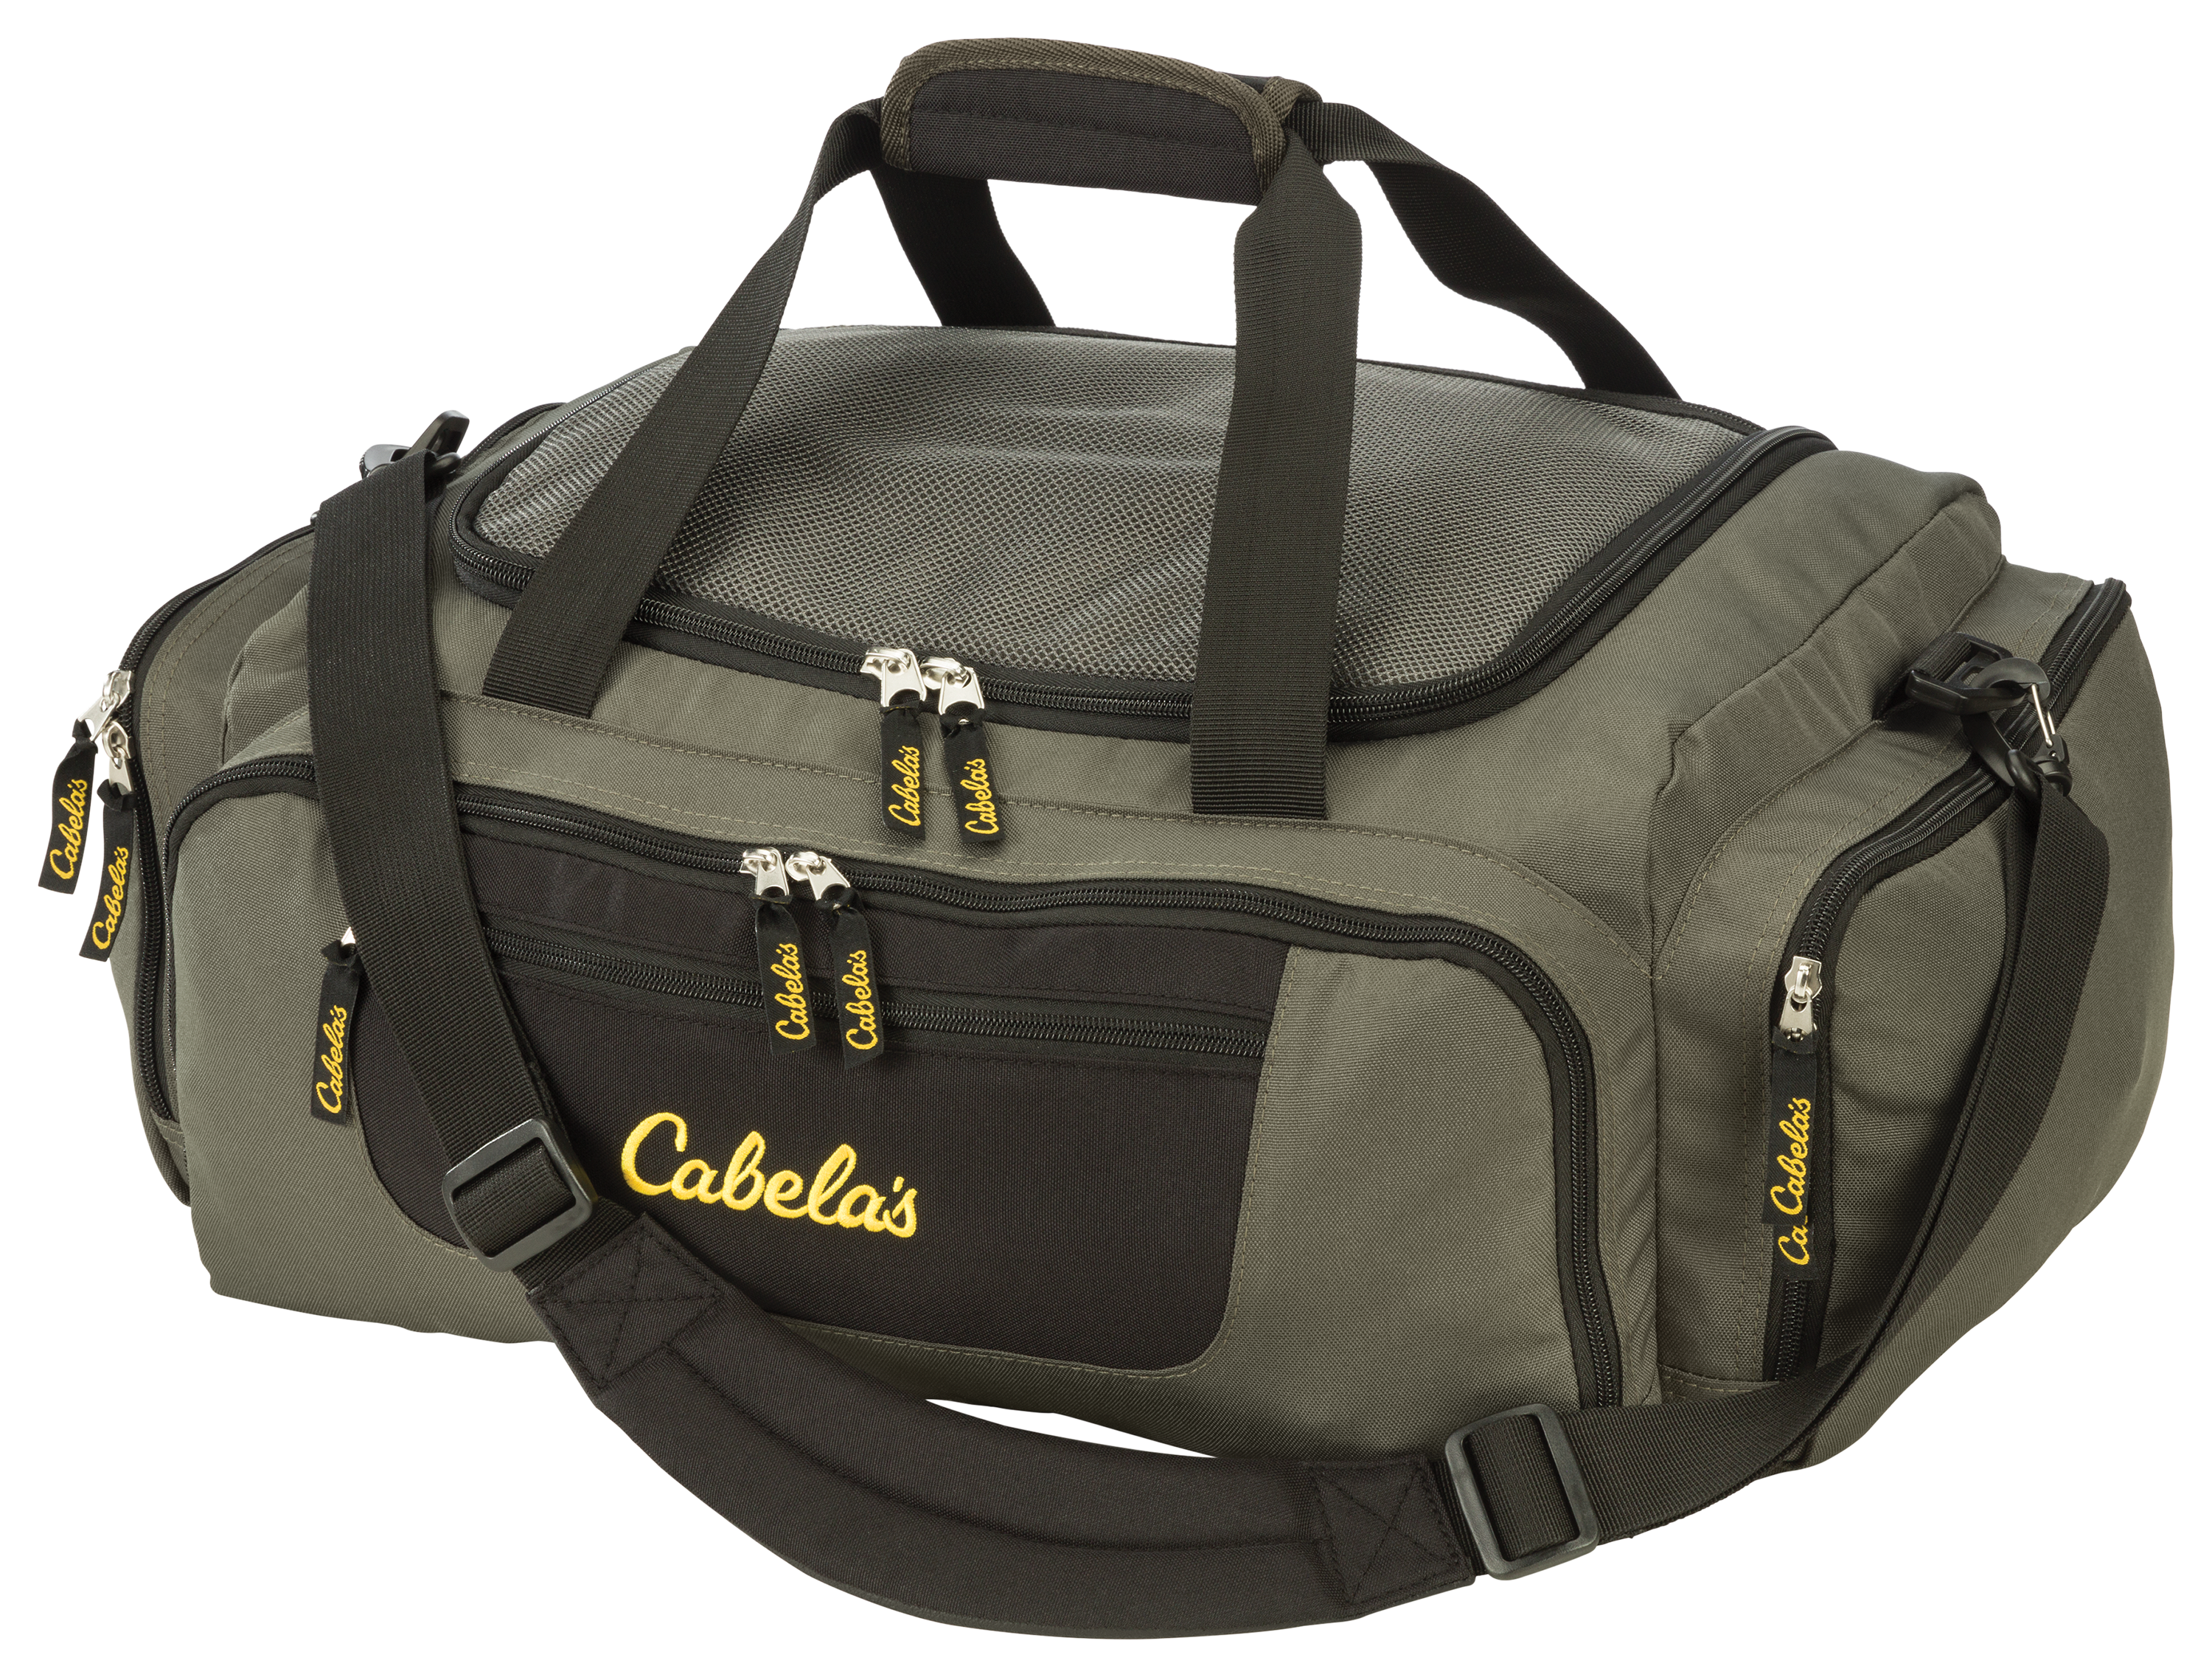 Cabela's Carryall Bag